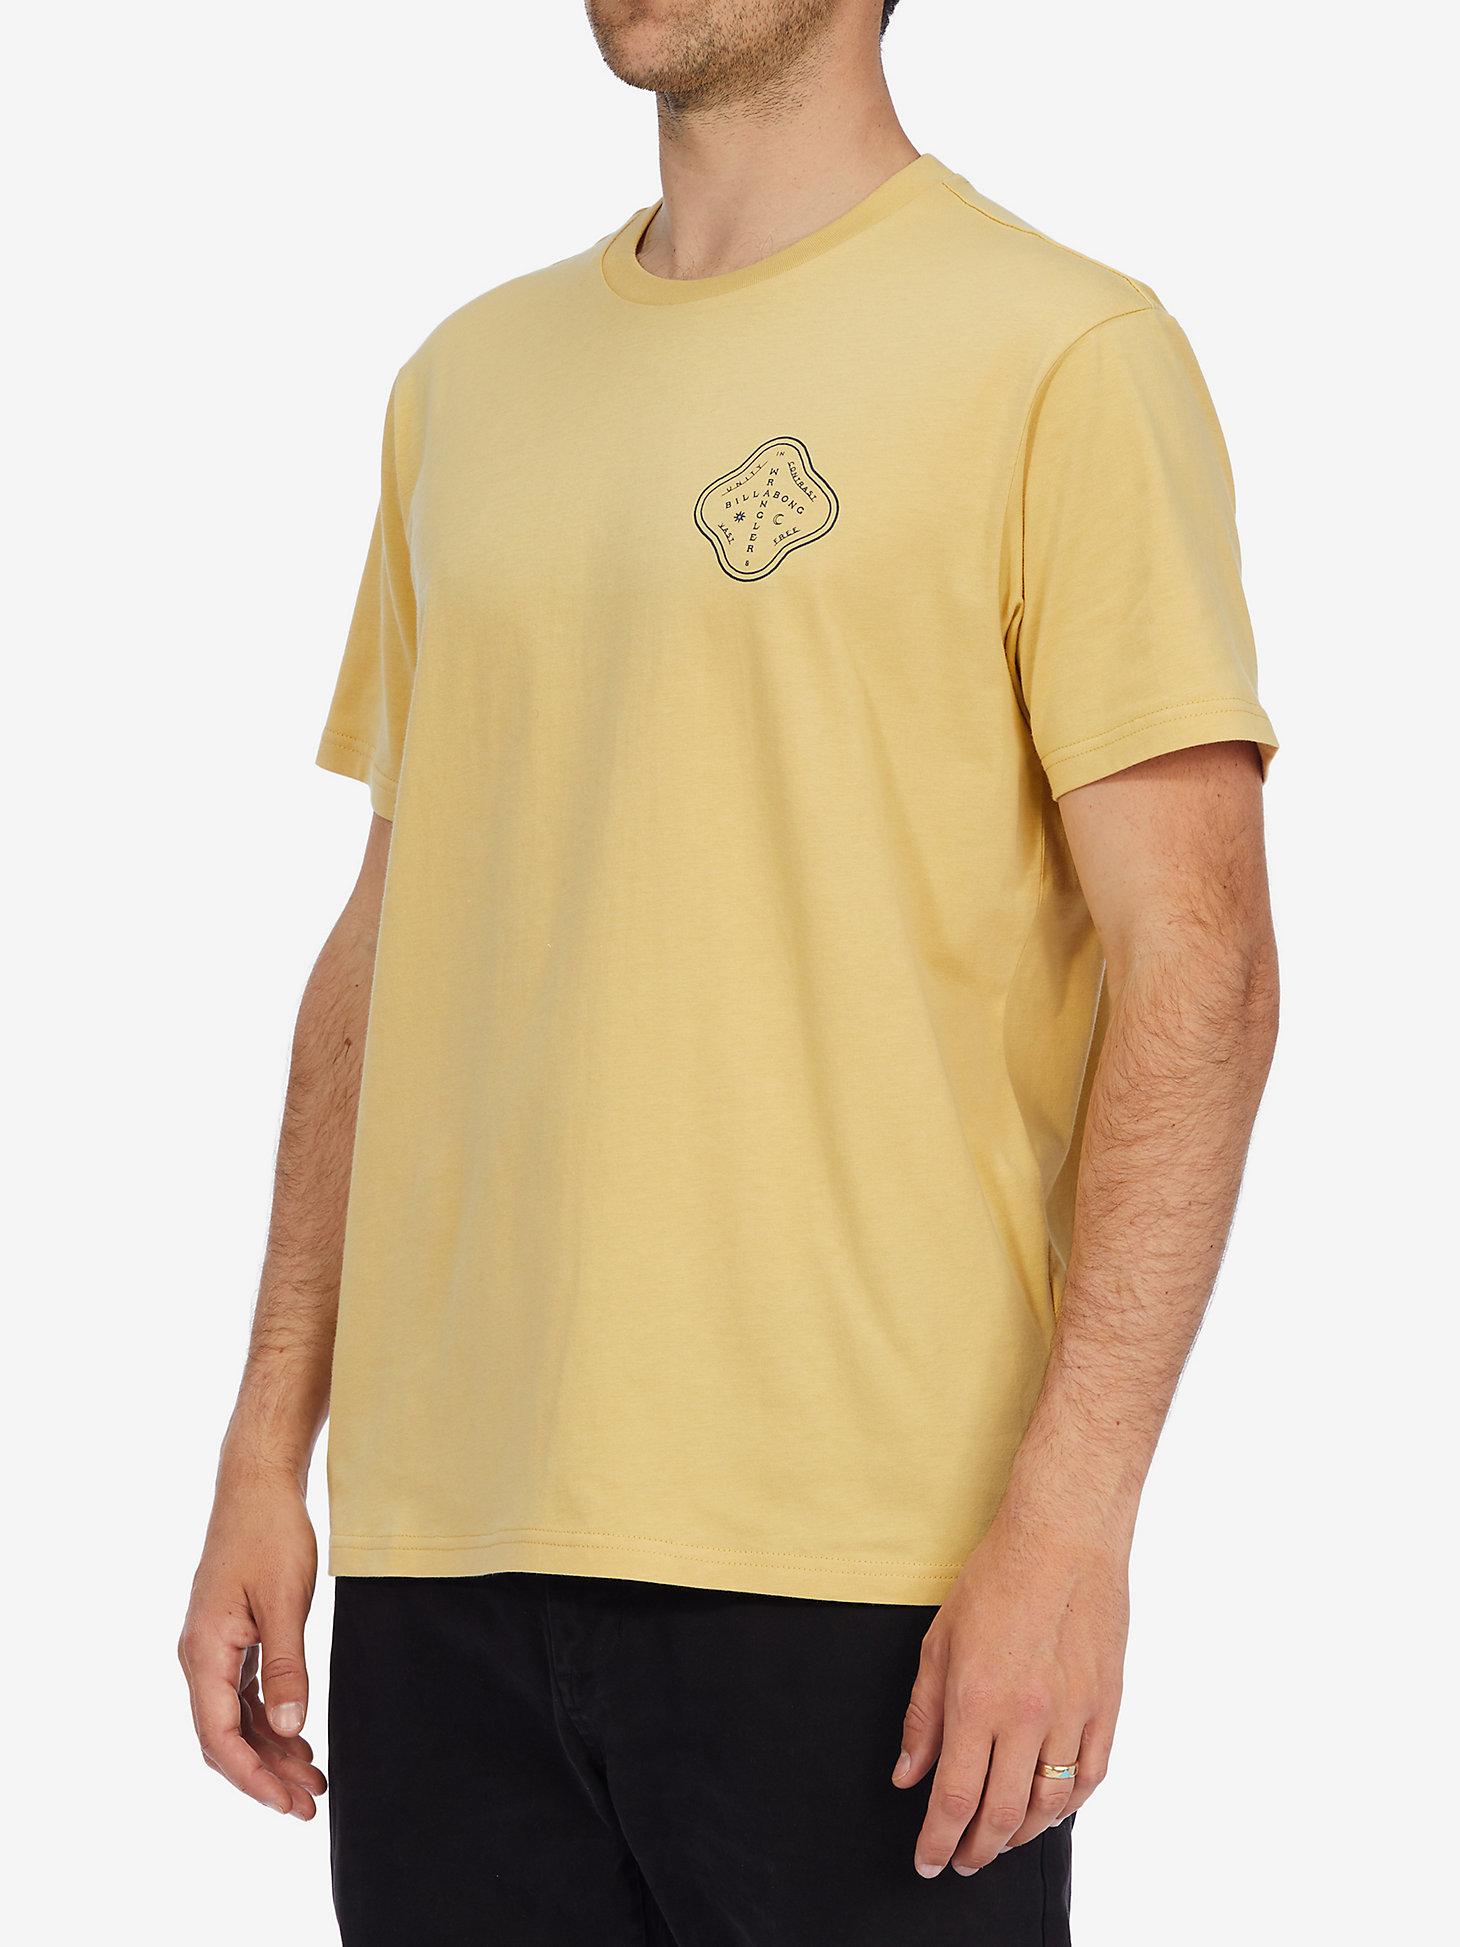 Billabong x Wrangler® Men's Rancher Graphic T-Shirt in Straw alternative view 3